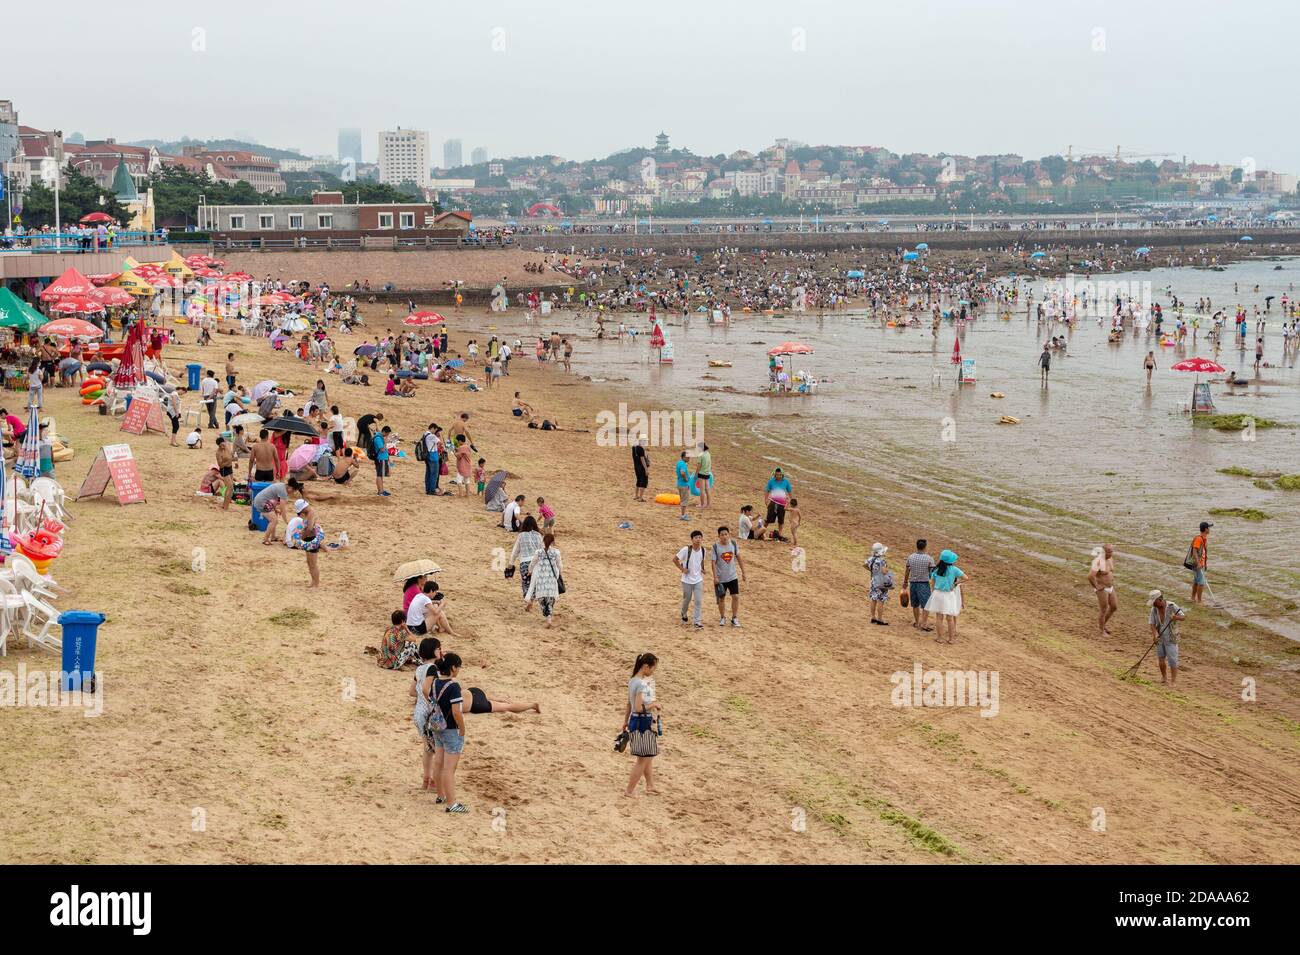 Qingdao / China - August 5, 2015: People bathing at the Qingdao city beach, Shandong province, China Stock Photo